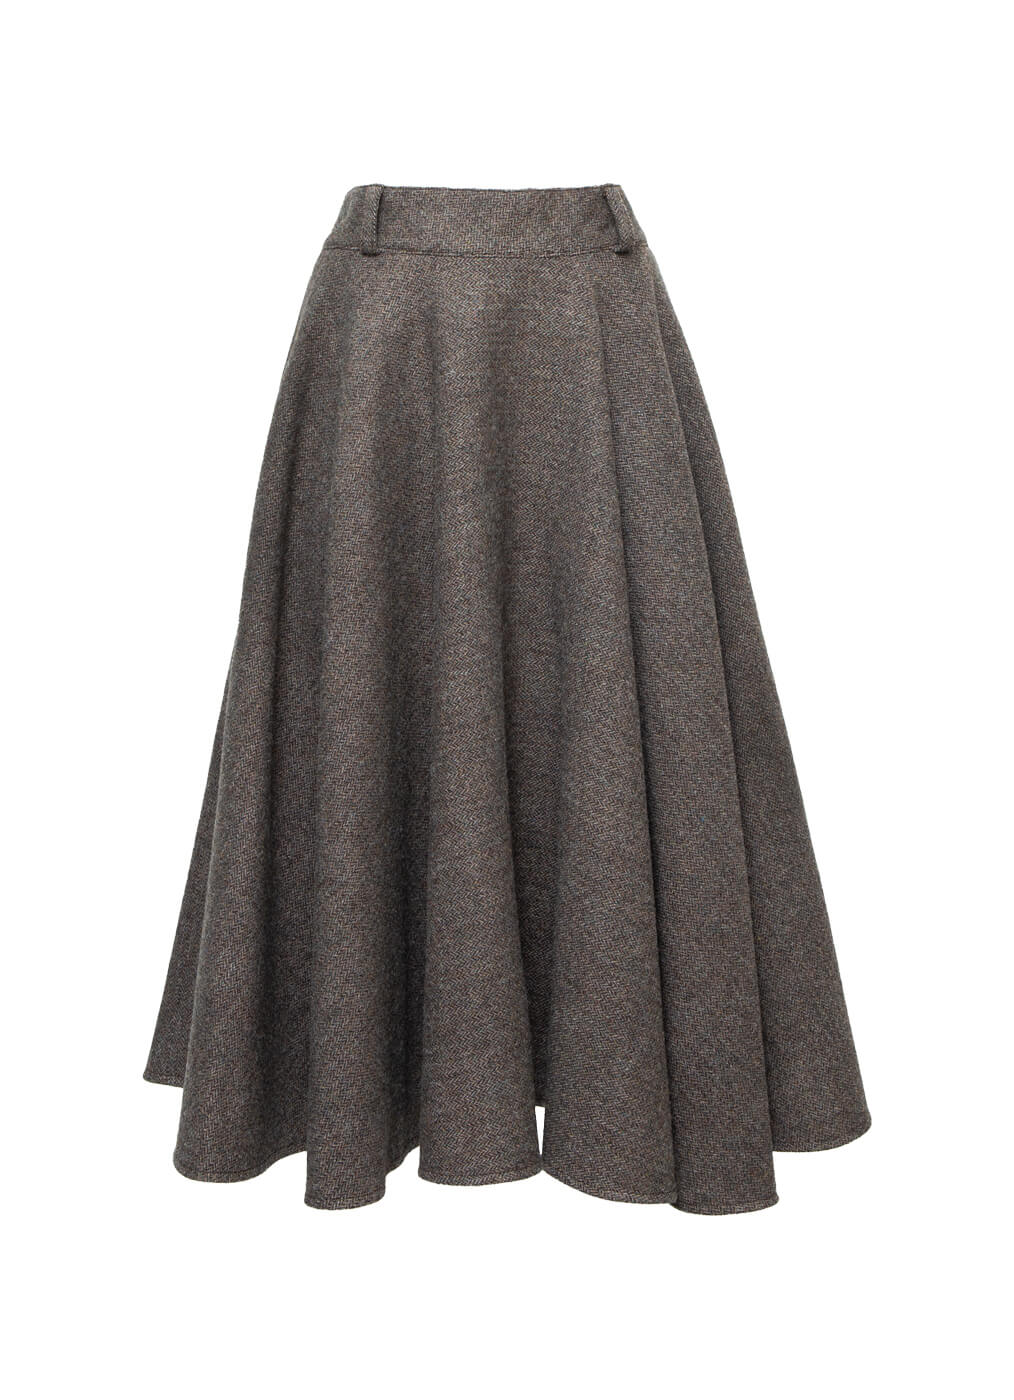 Wool Skirt “Princess of Wales”, brown antique